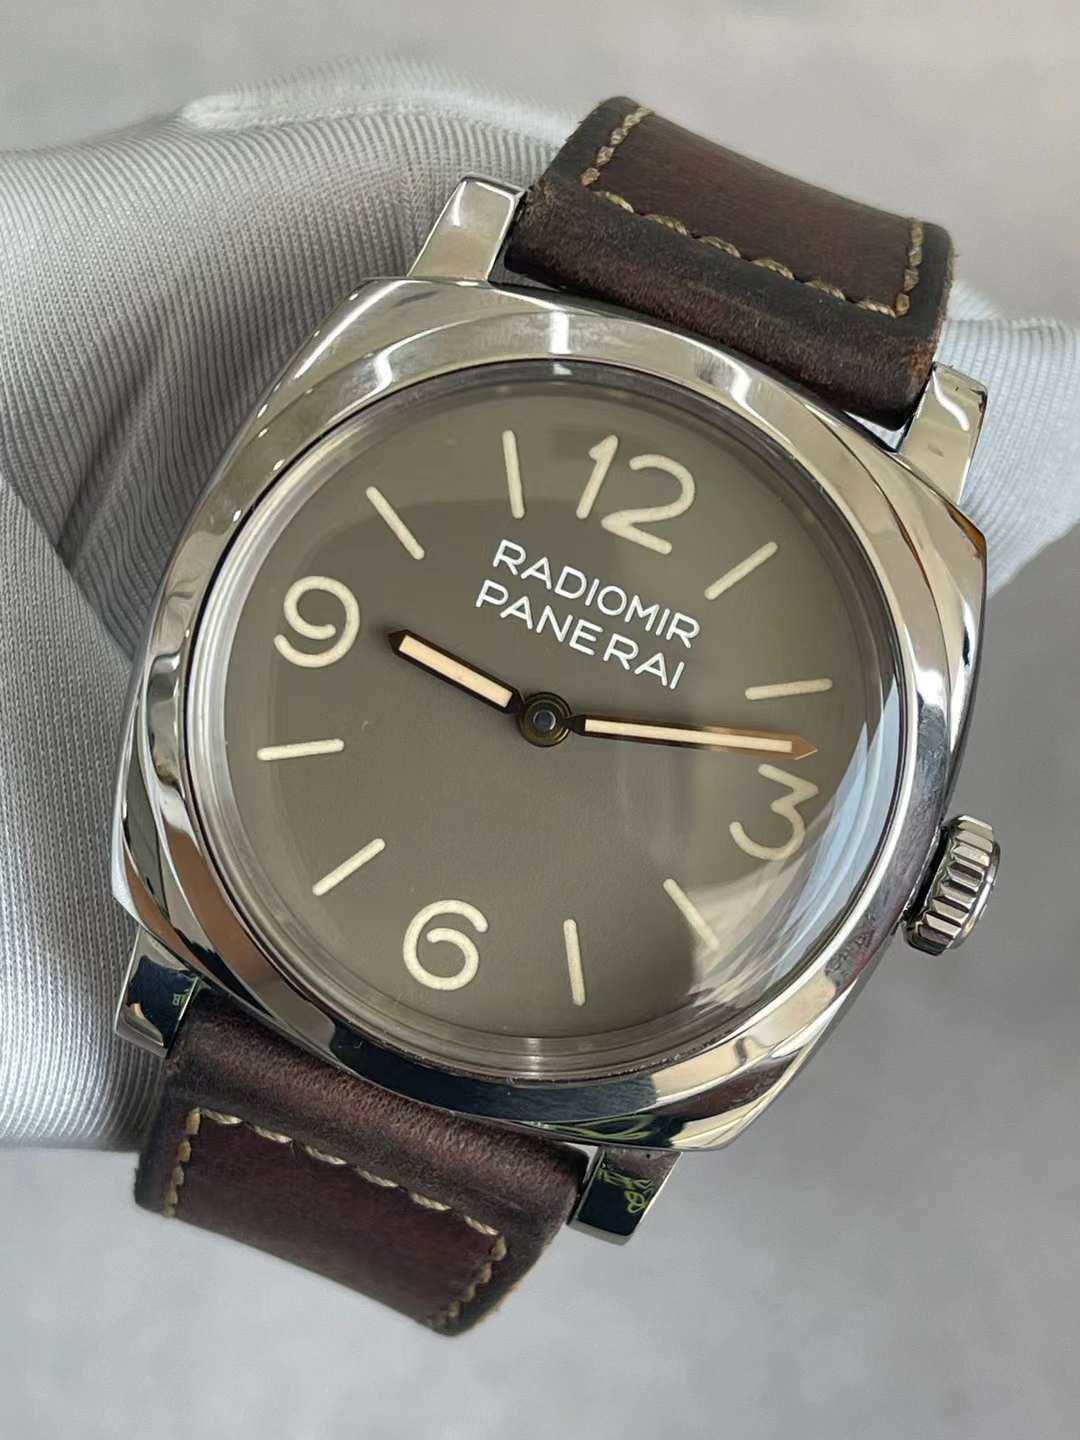 Pannerai Watch Luxury Designer Special Edition PAM00662 Manual Mechanical Mens Watch 47mm